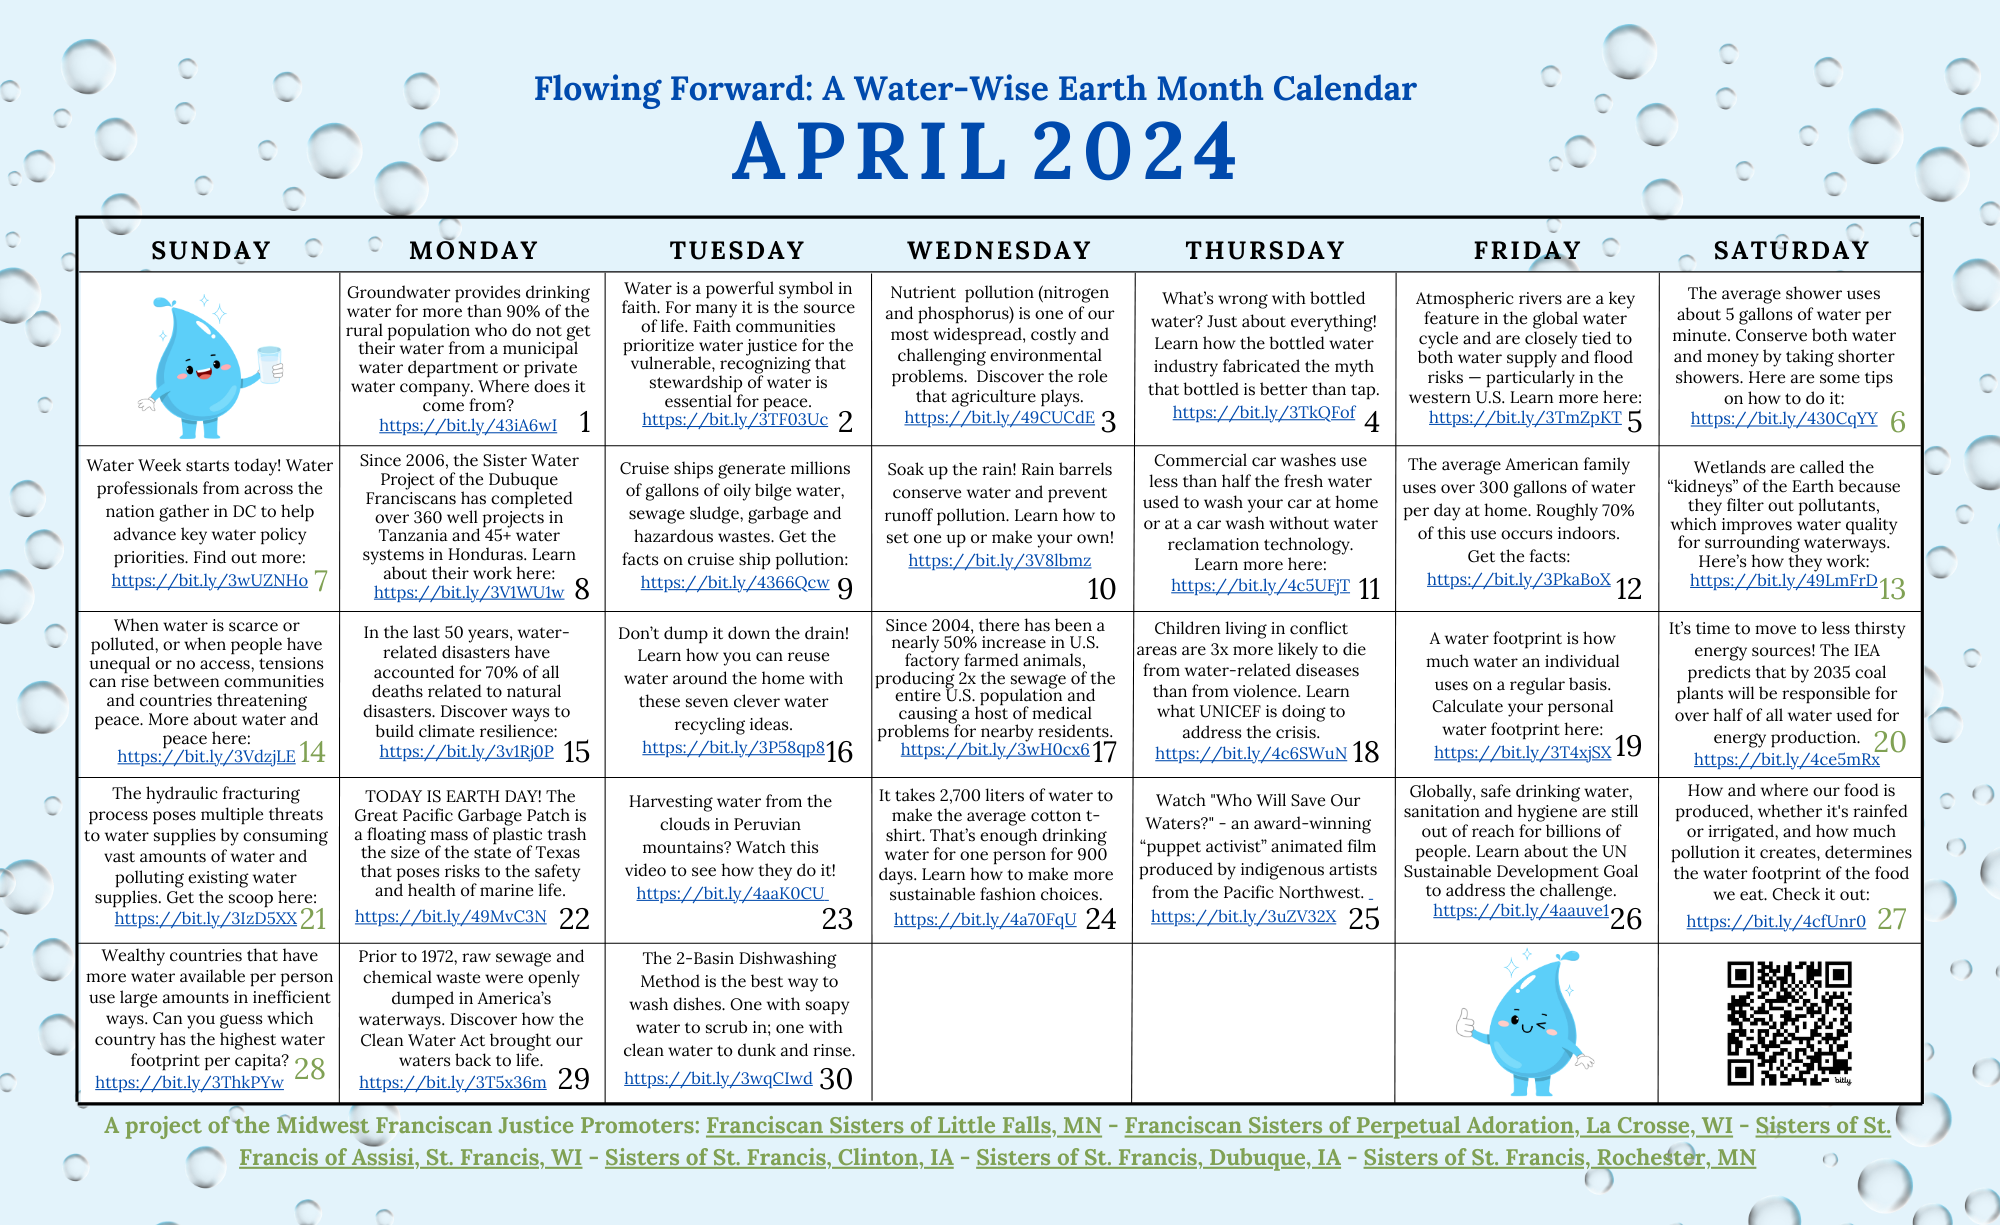 Flowing Forward Water Calendar 2024